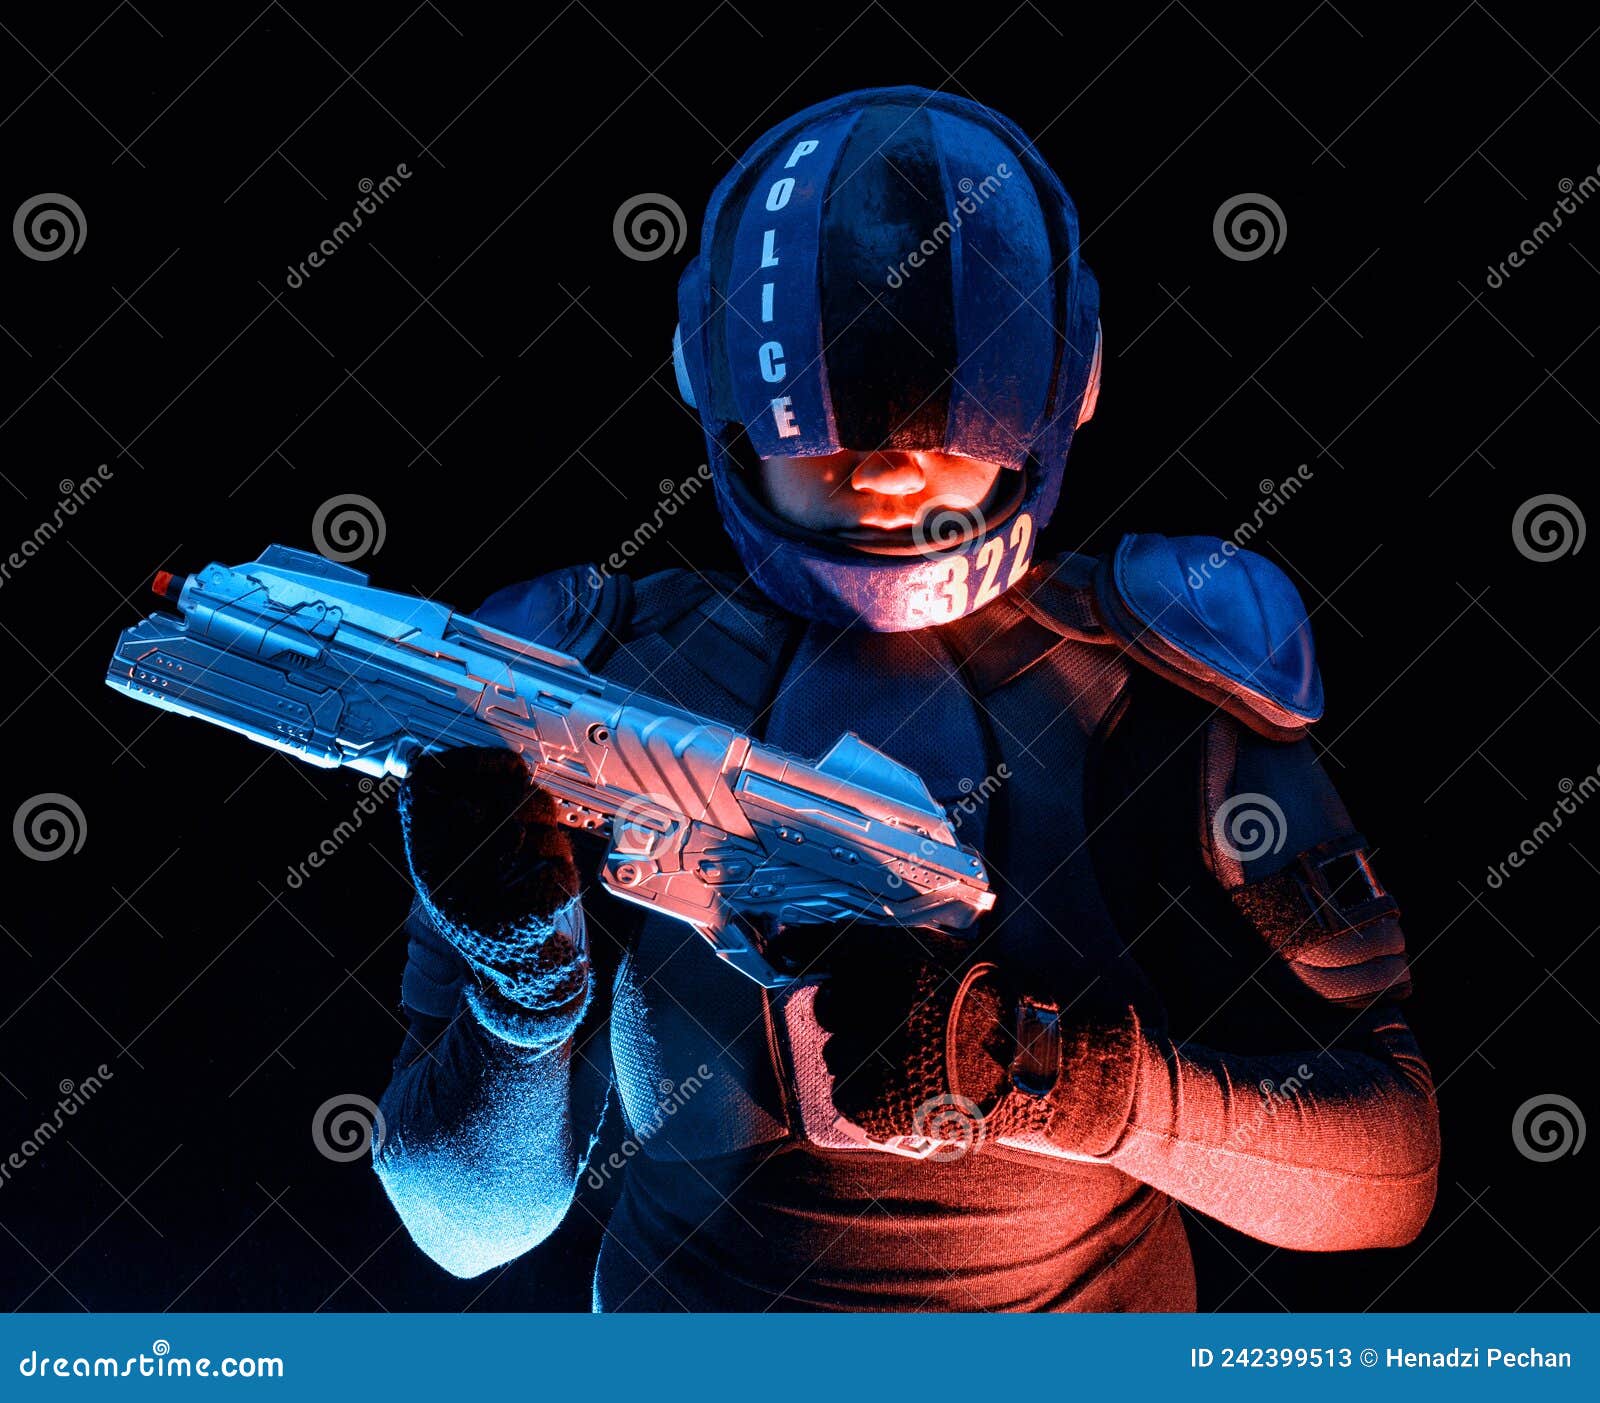 cyberpunk future concept. police officer reloads futuristic shotgun in dark. robot aims at camera. halfman bionic cyborg releases